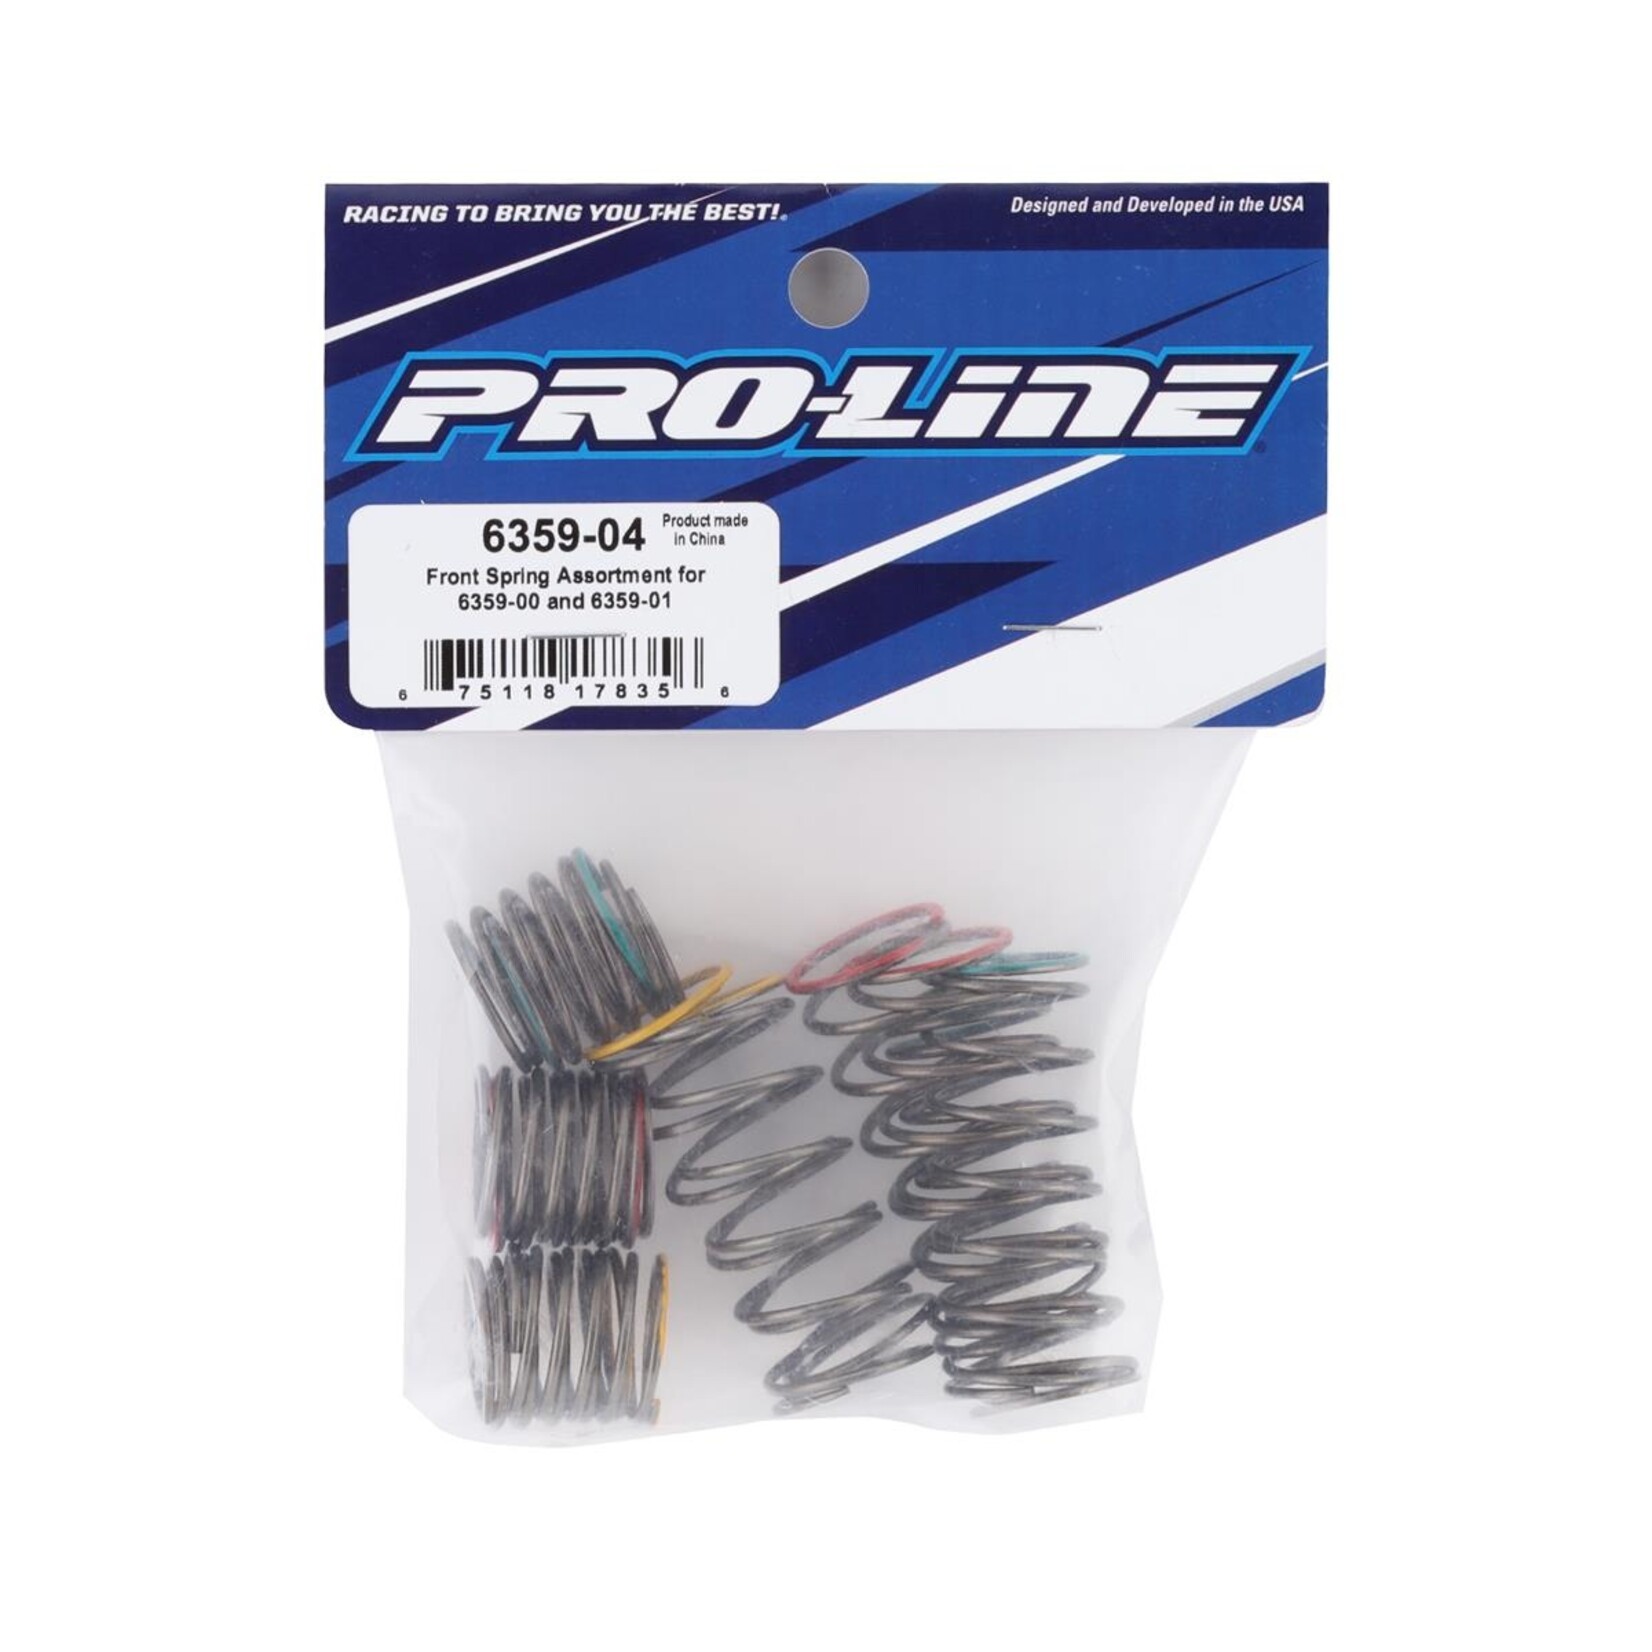 Pro-Line Pro-Line Arrma 4S BLX PowerStroke Front Spring Assortment #6359-04